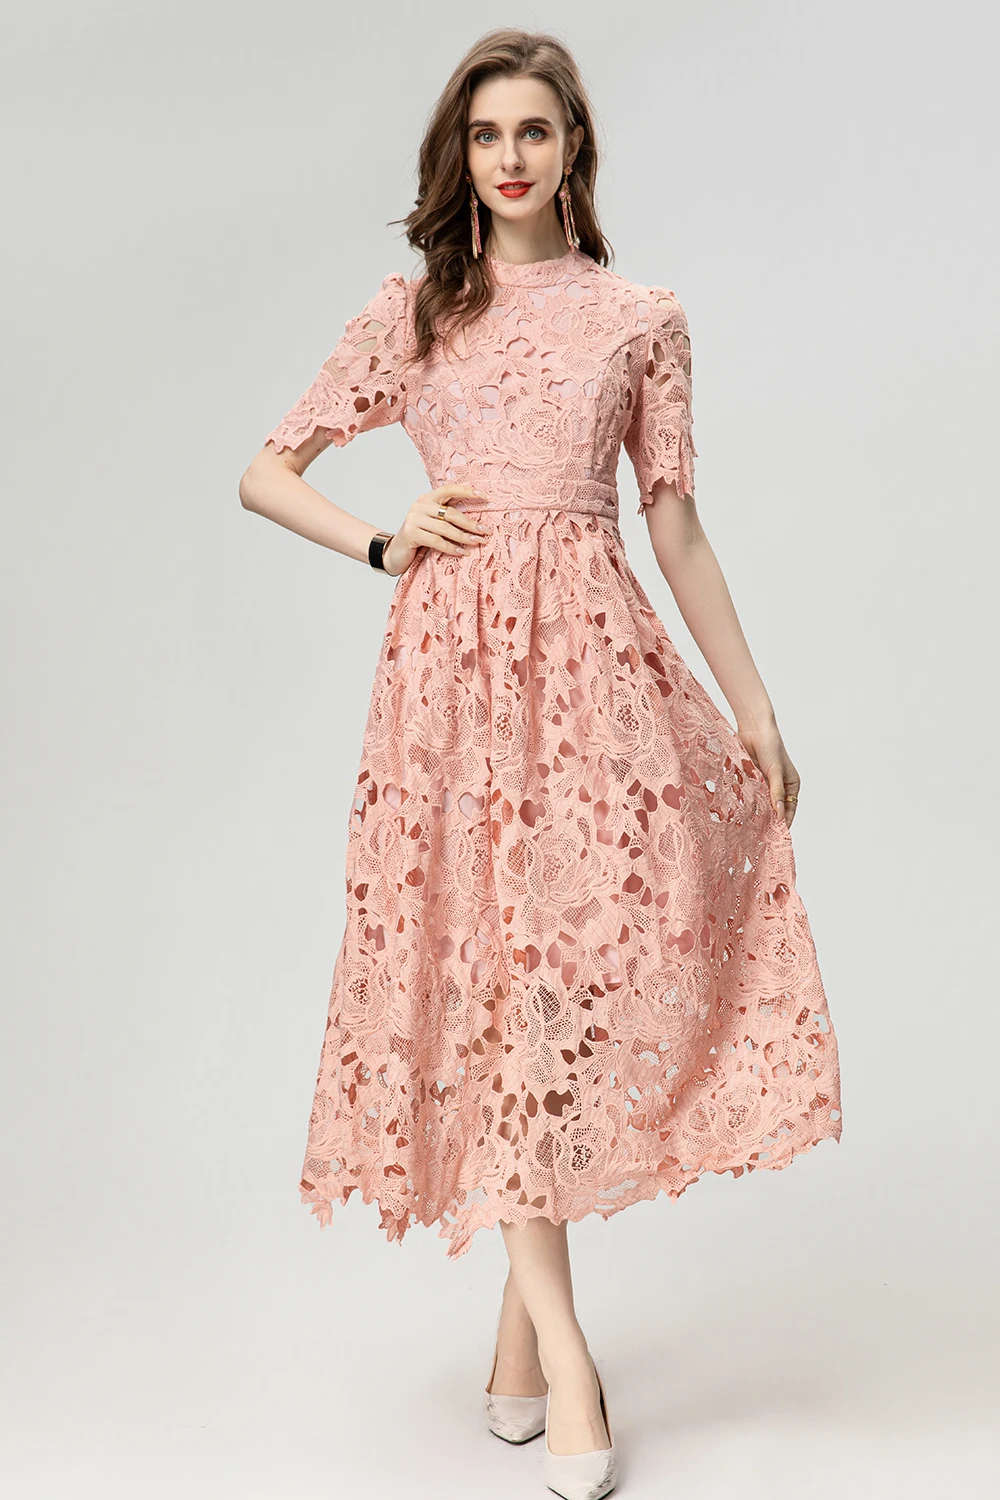 

SEQINYY Elegant Midi Dress Summer Spring New Fashion Design Women Runway Short Sleeve Hollow Out Flower A-Line Casual